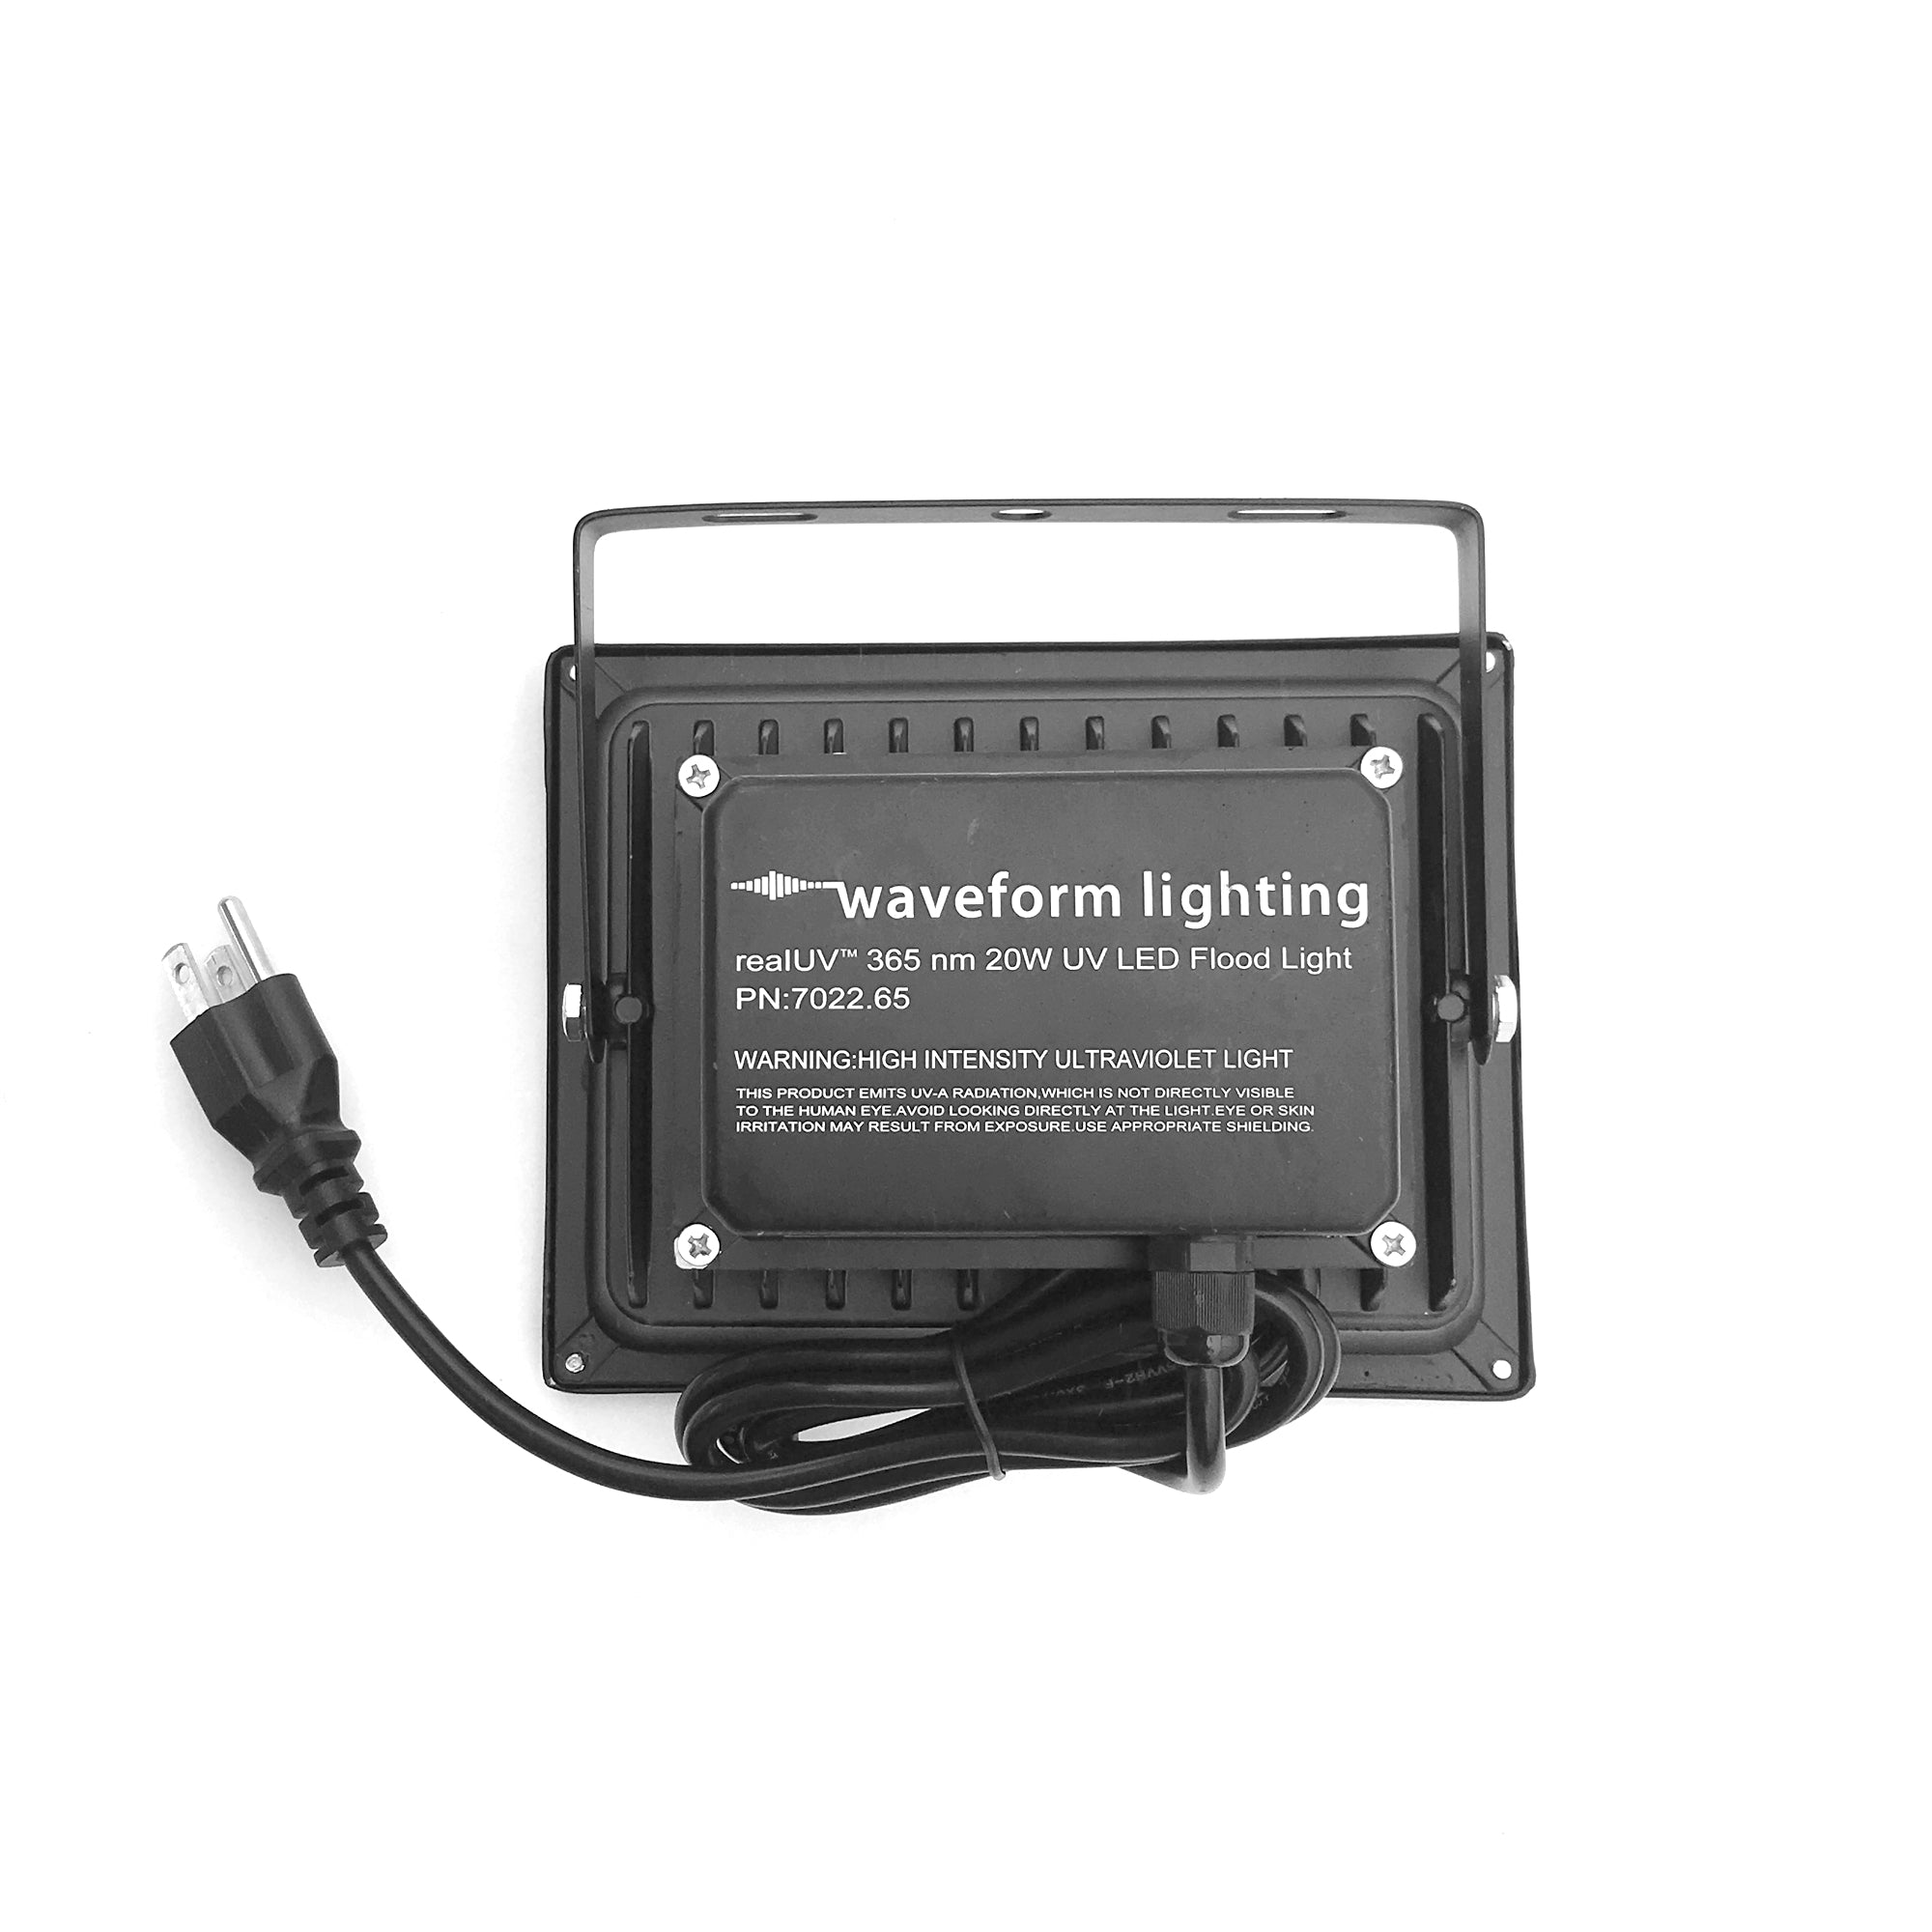 realUV™ LED Flood Lights – Waveform Lighting